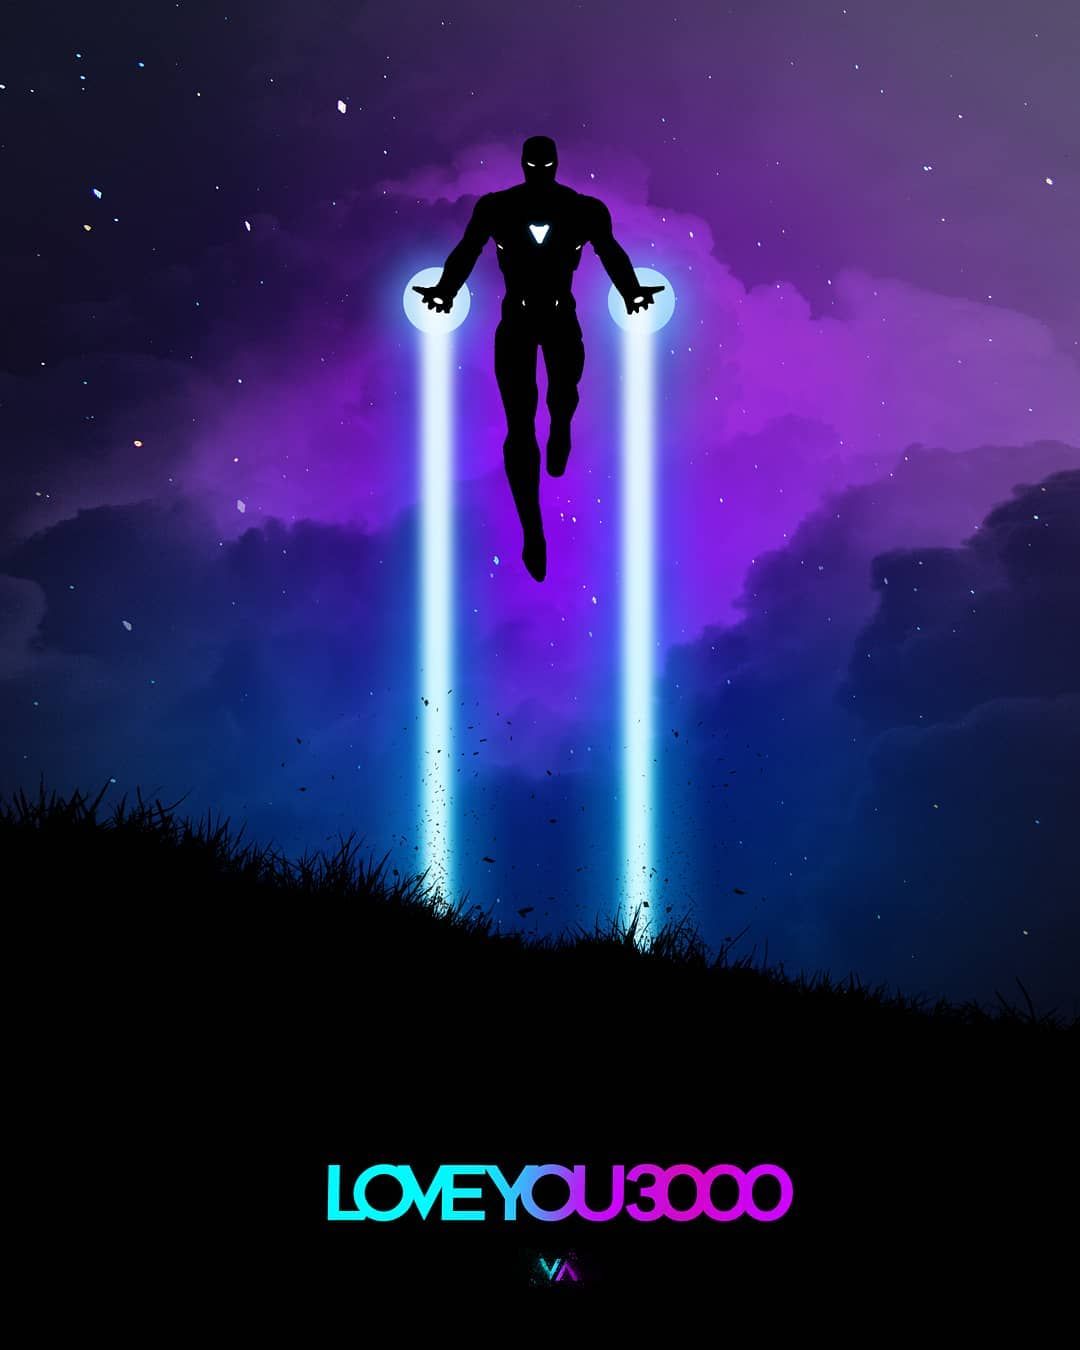 Love You 3000❤ #avengersendgame #ironman